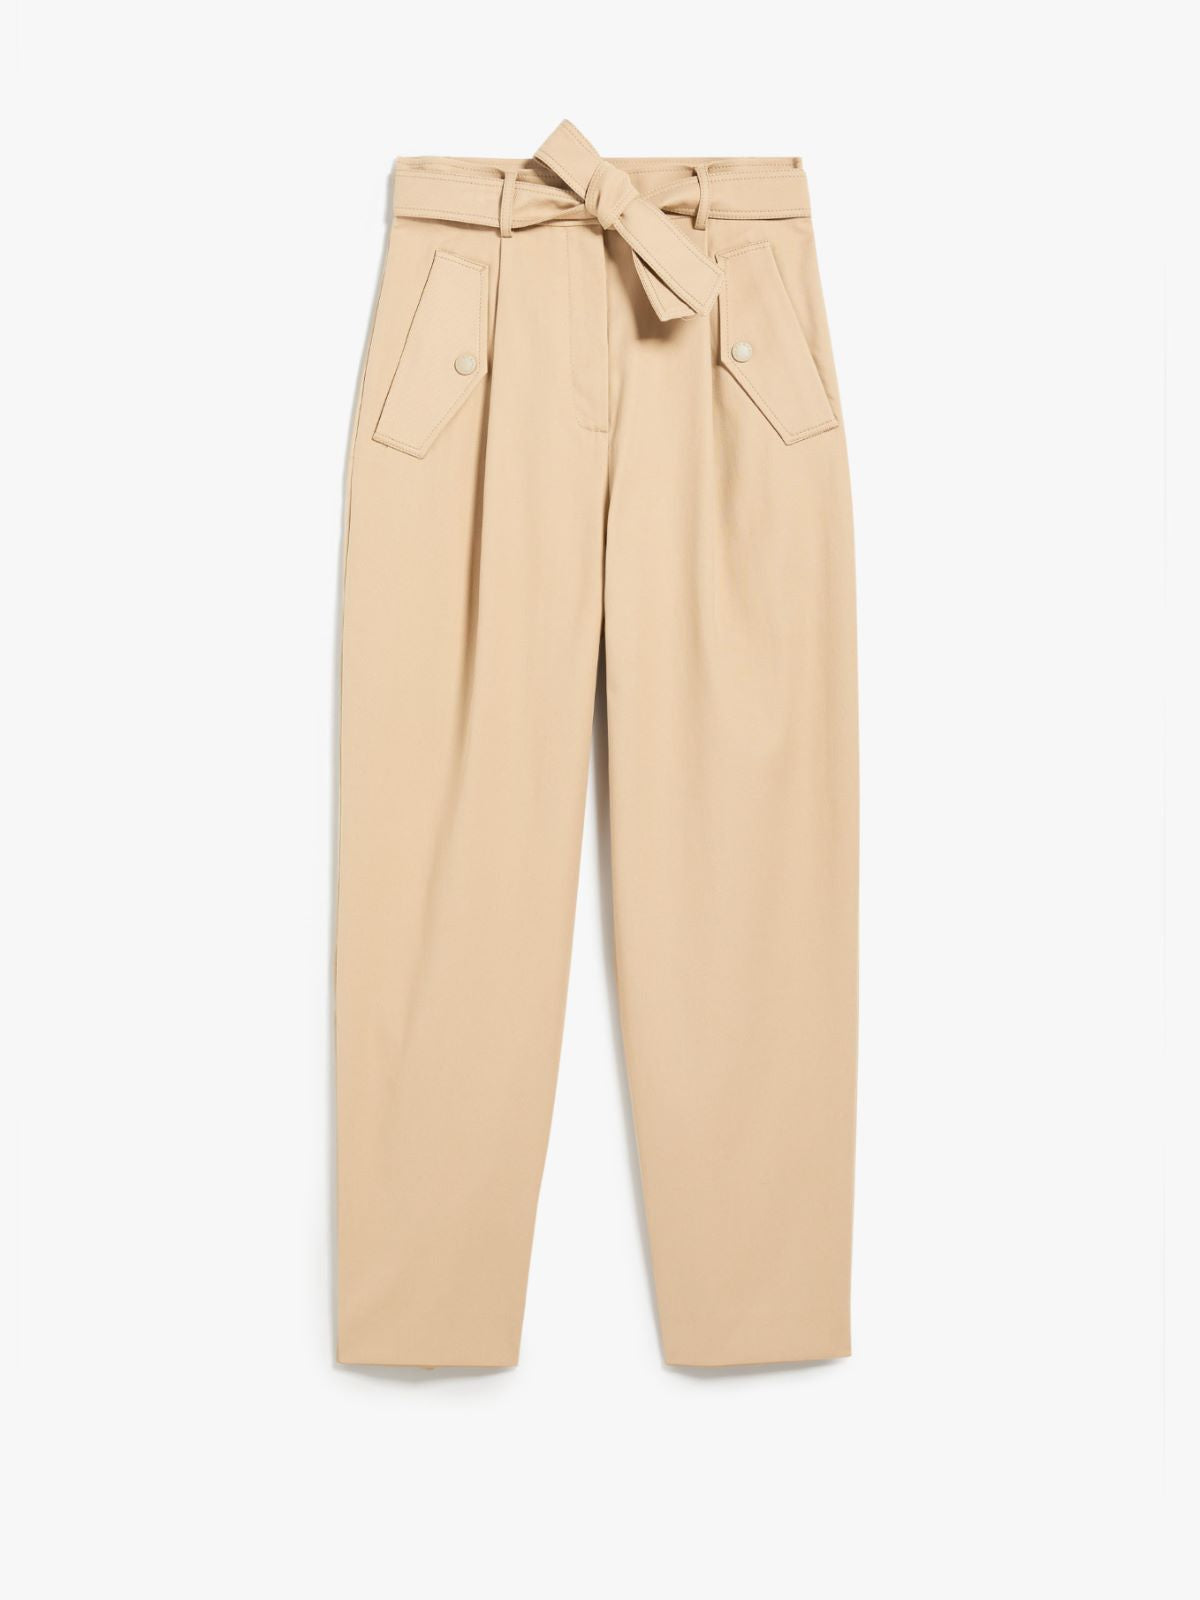 WeekEnd Max Mara pantalone CARROT FIT in cotone